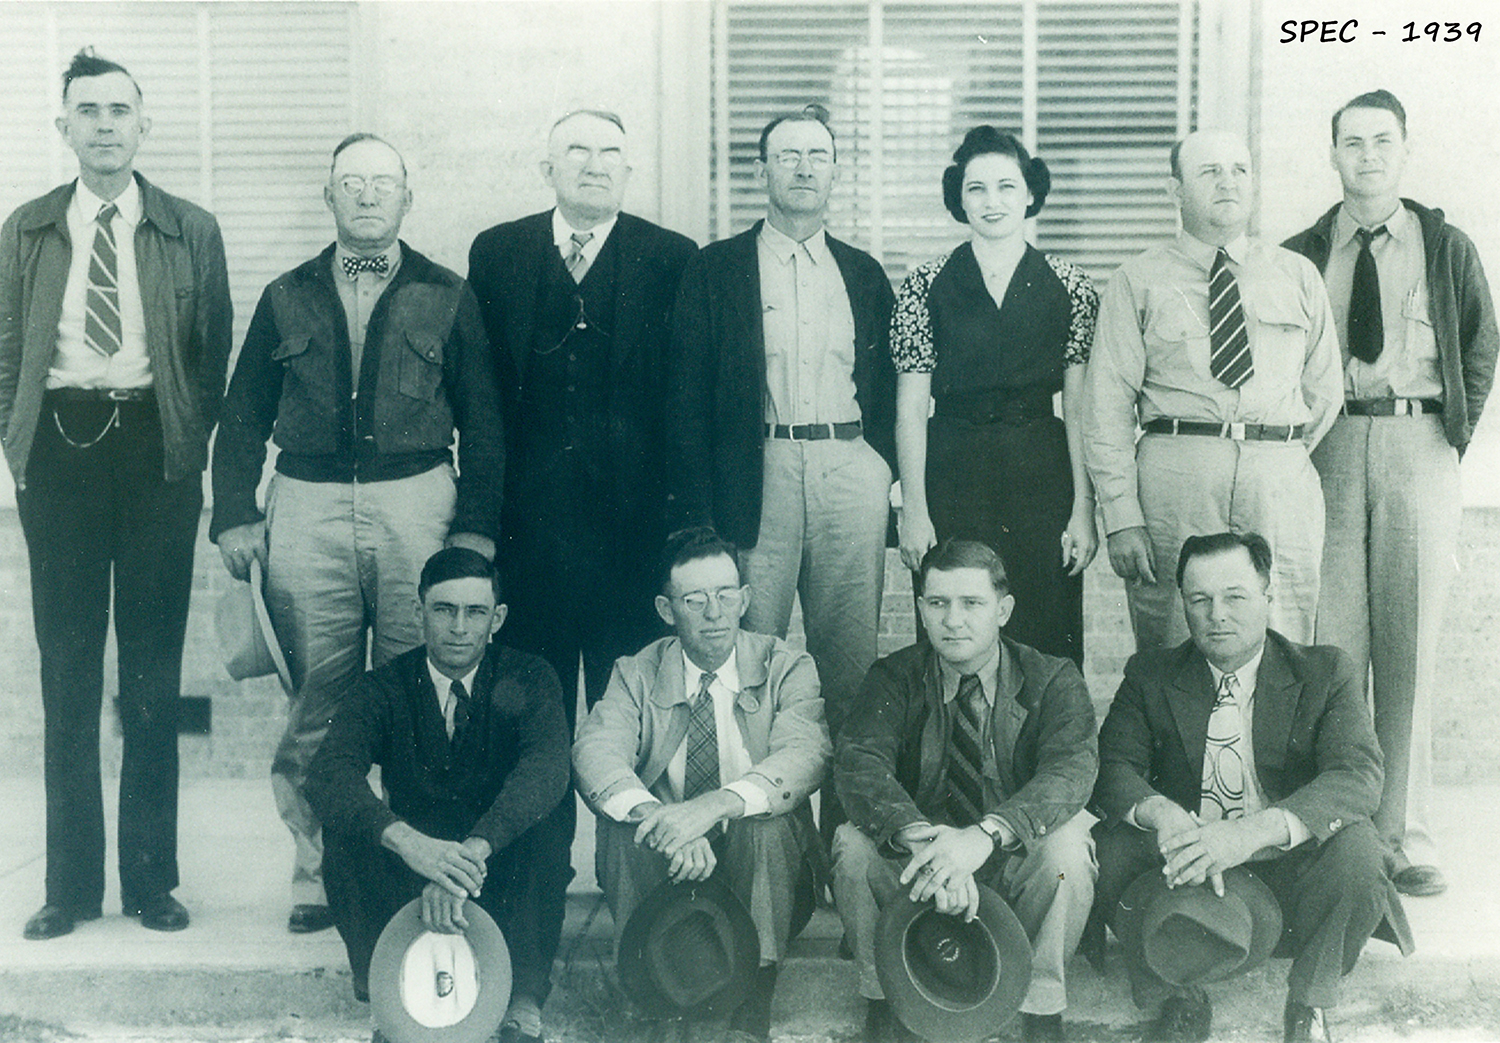 SPEC Founding Members in 1939